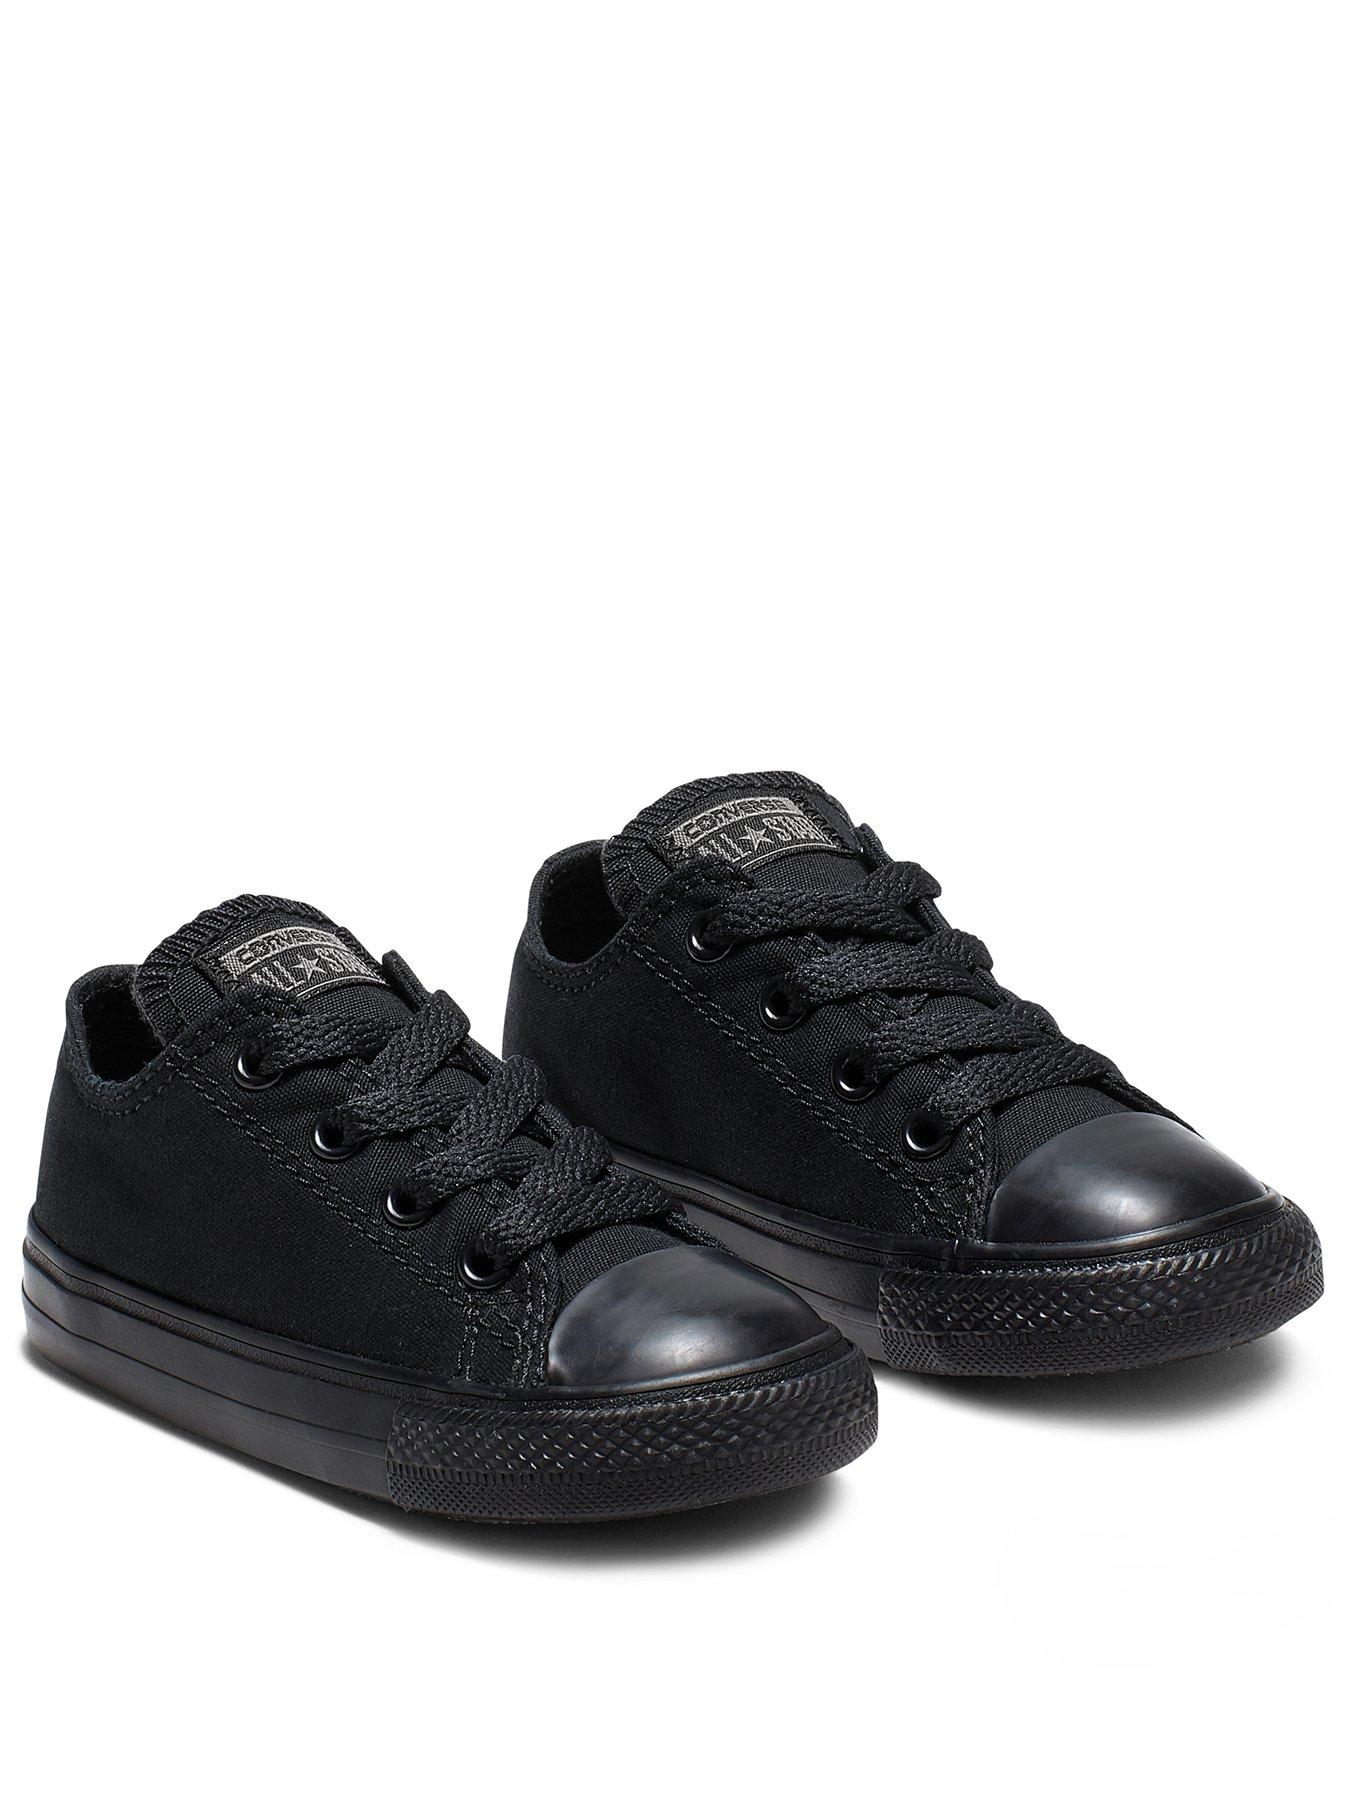 size 4 all black converse